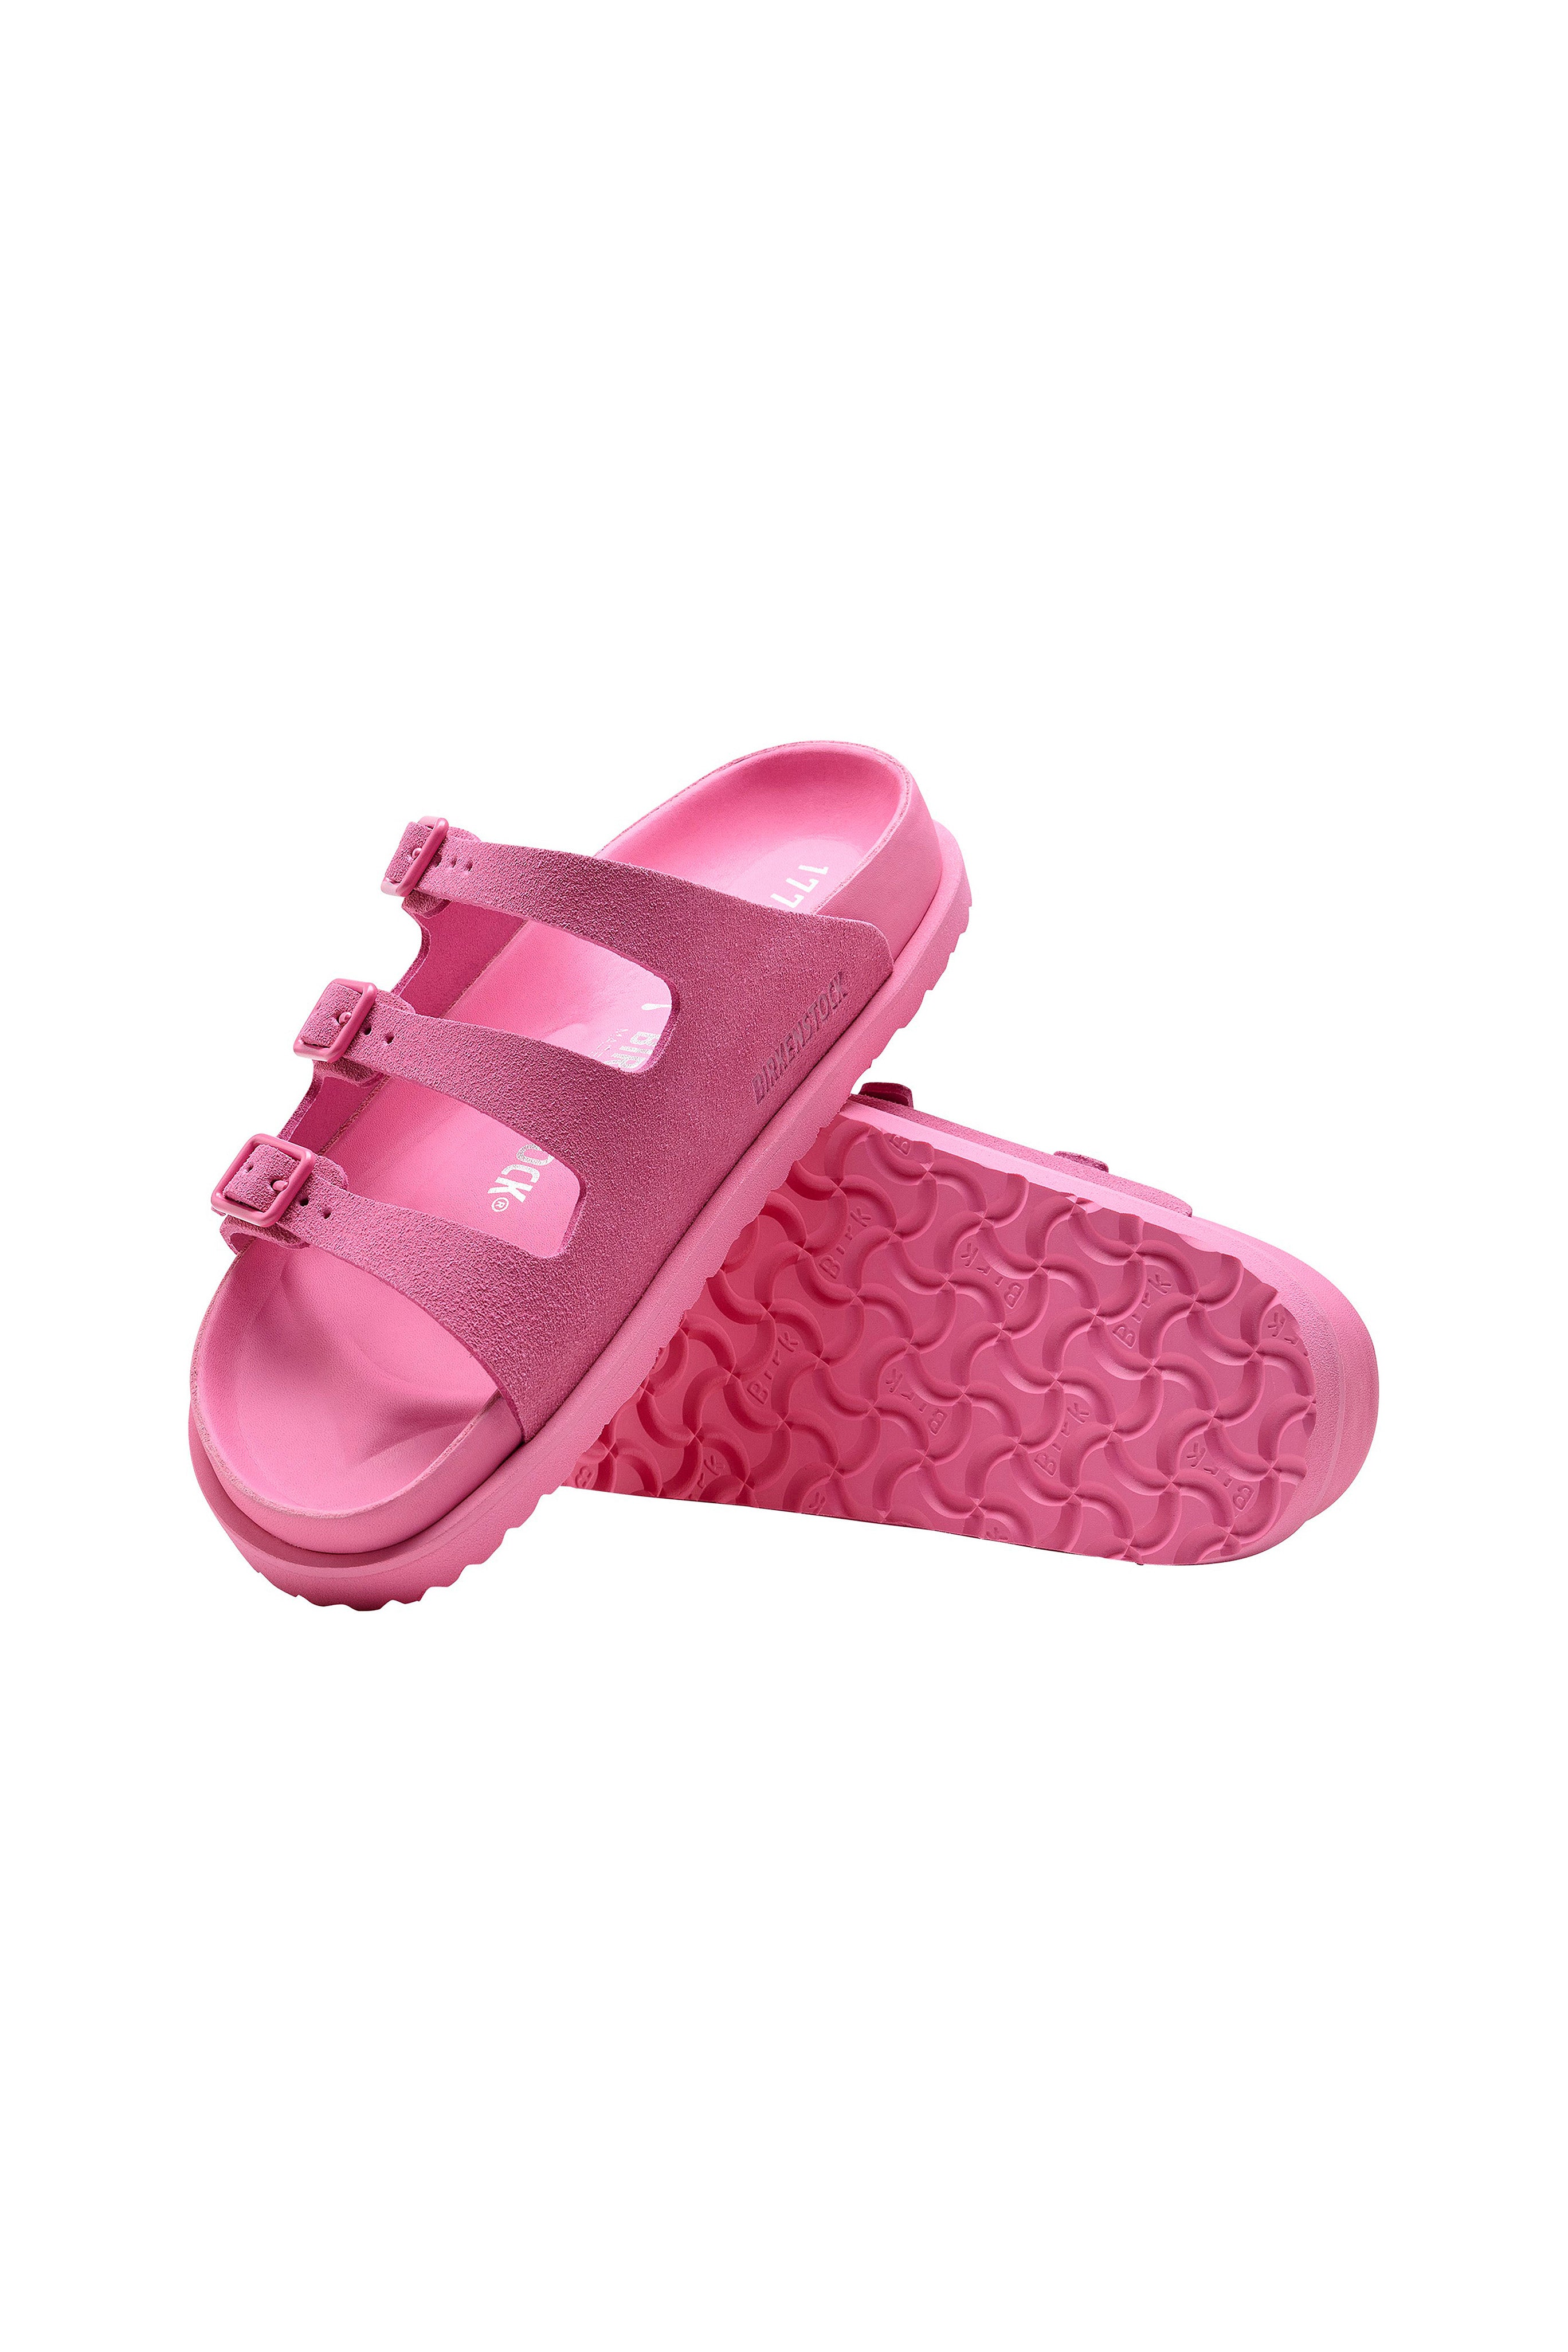 Florida Pink Suede Sandals